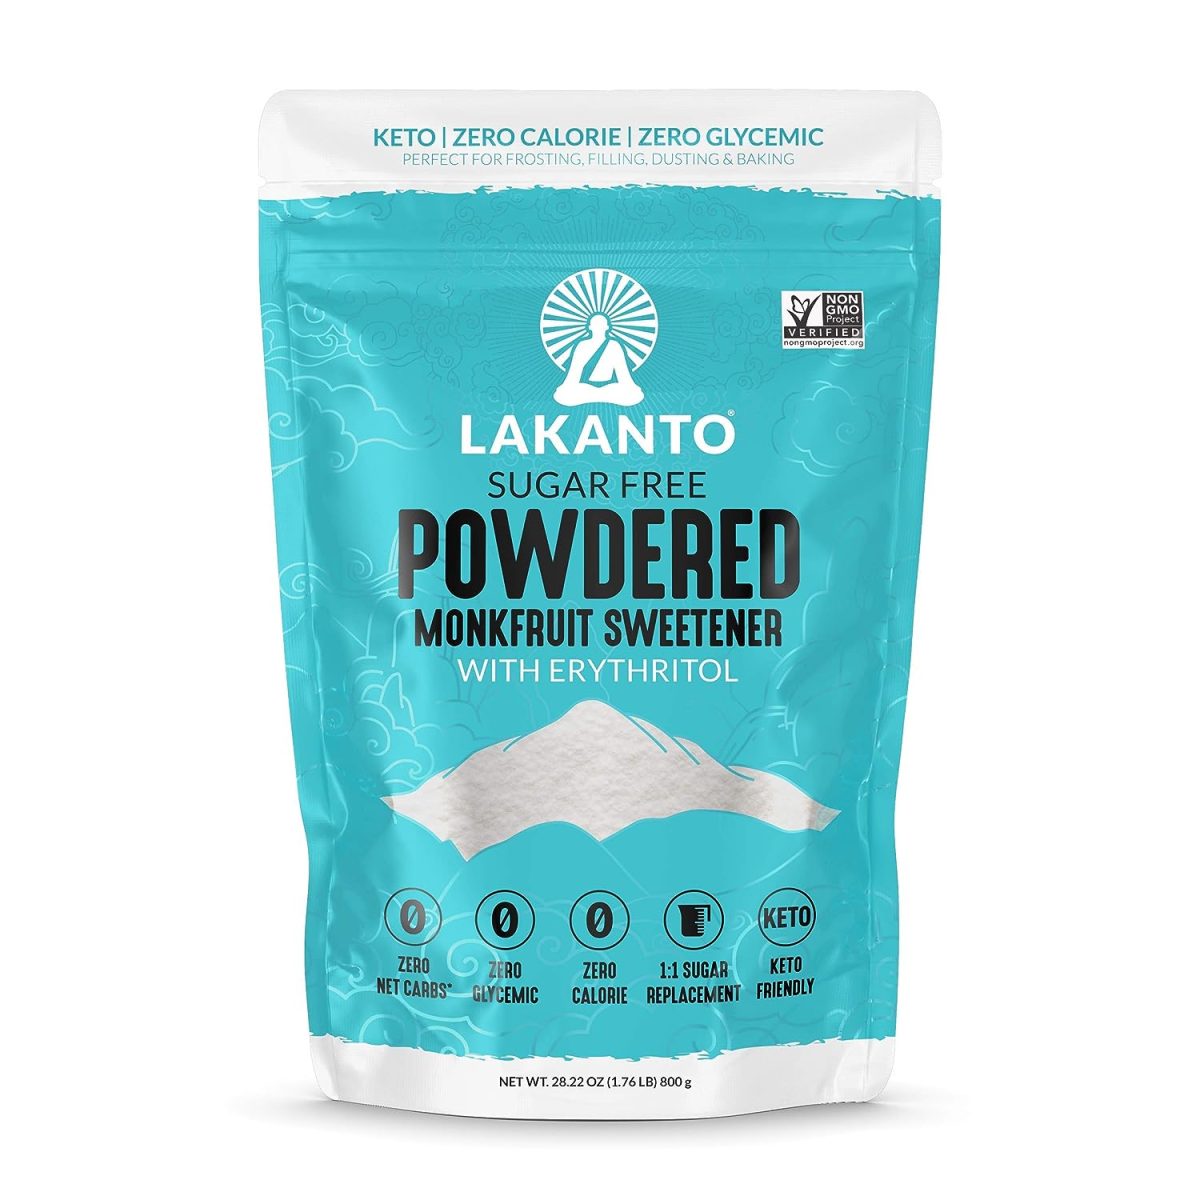 Lakanto Powdered Monk Fruit Sweetener with Erythritol - Powdered Sugar Substitute